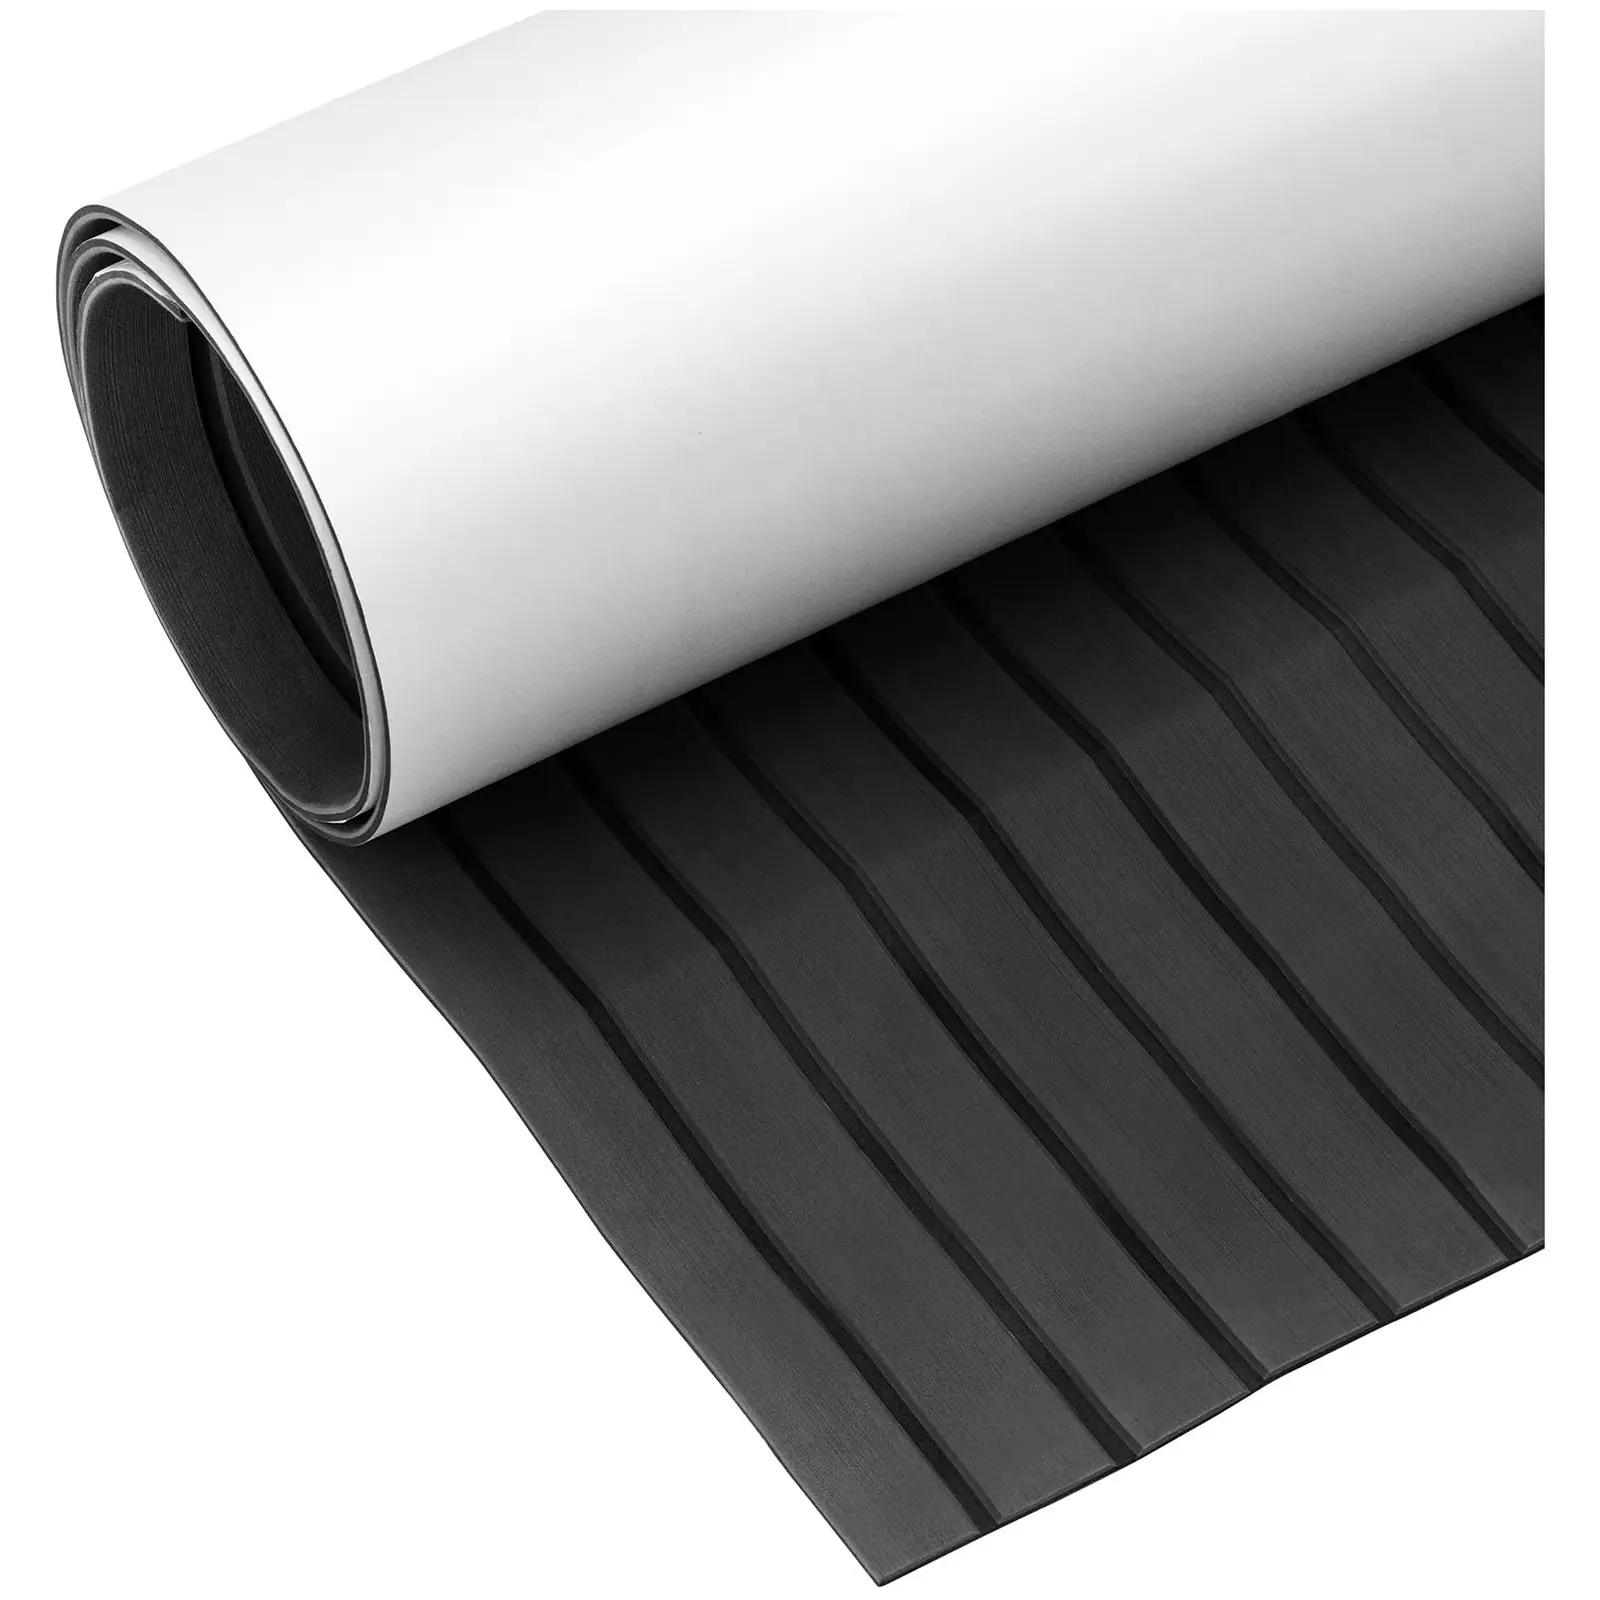 Valčių grindys - 240 x 90 cm - antracito/juodos spalvos